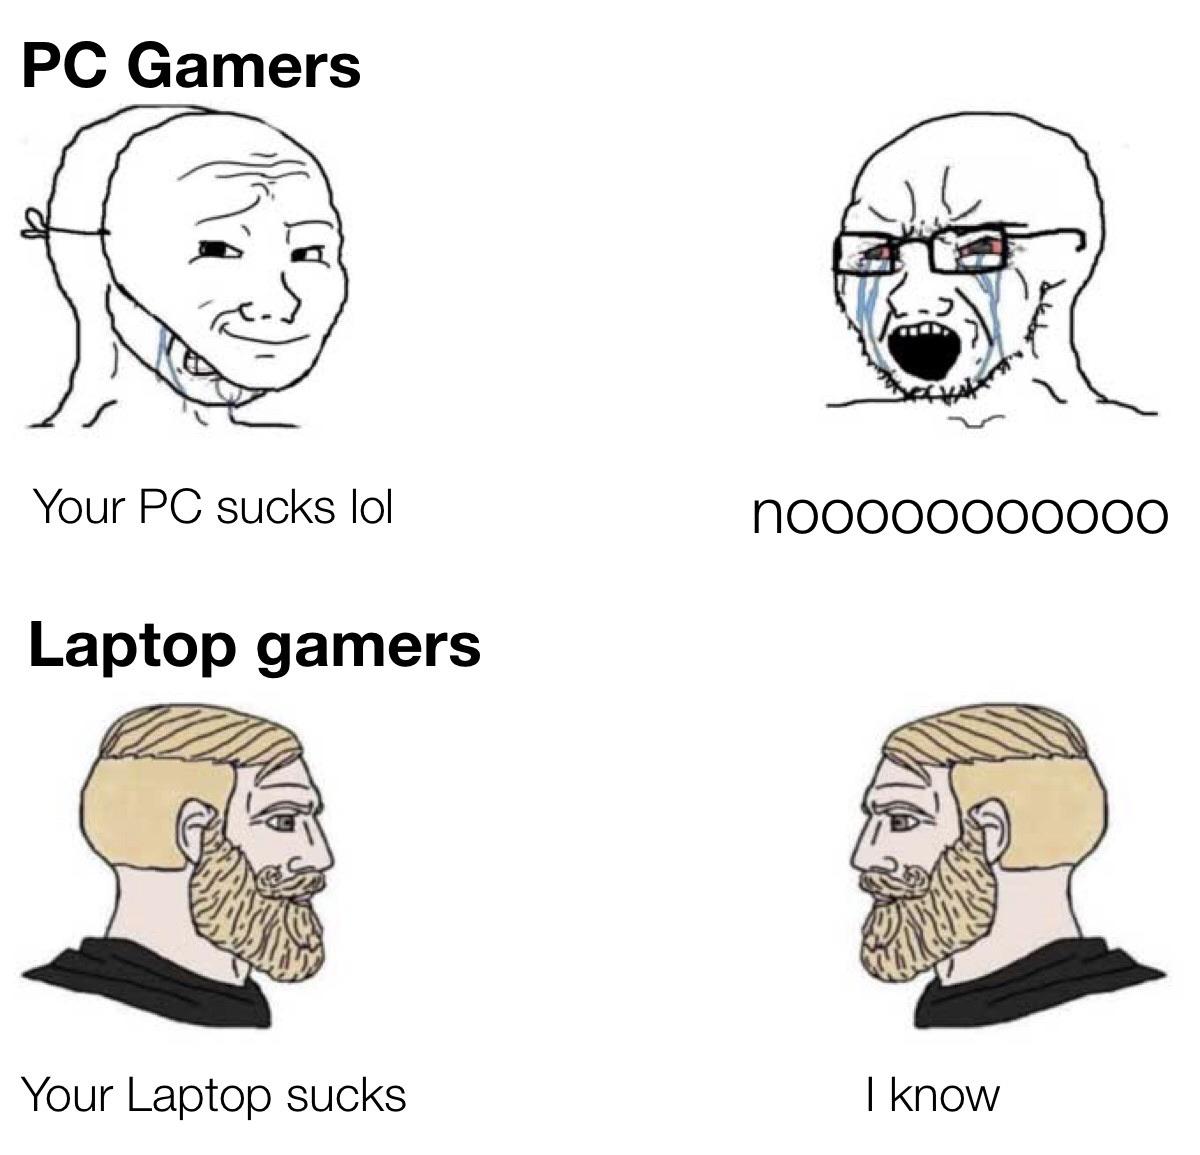 Dank, PC, PCs, Minecraft, FPS, No Dank Memes Dank, PC, PCs, Minecraft, FPS, No text: PC Gamers Your PC sucks Iol Your Laptop sucks nooooooooooo I know 